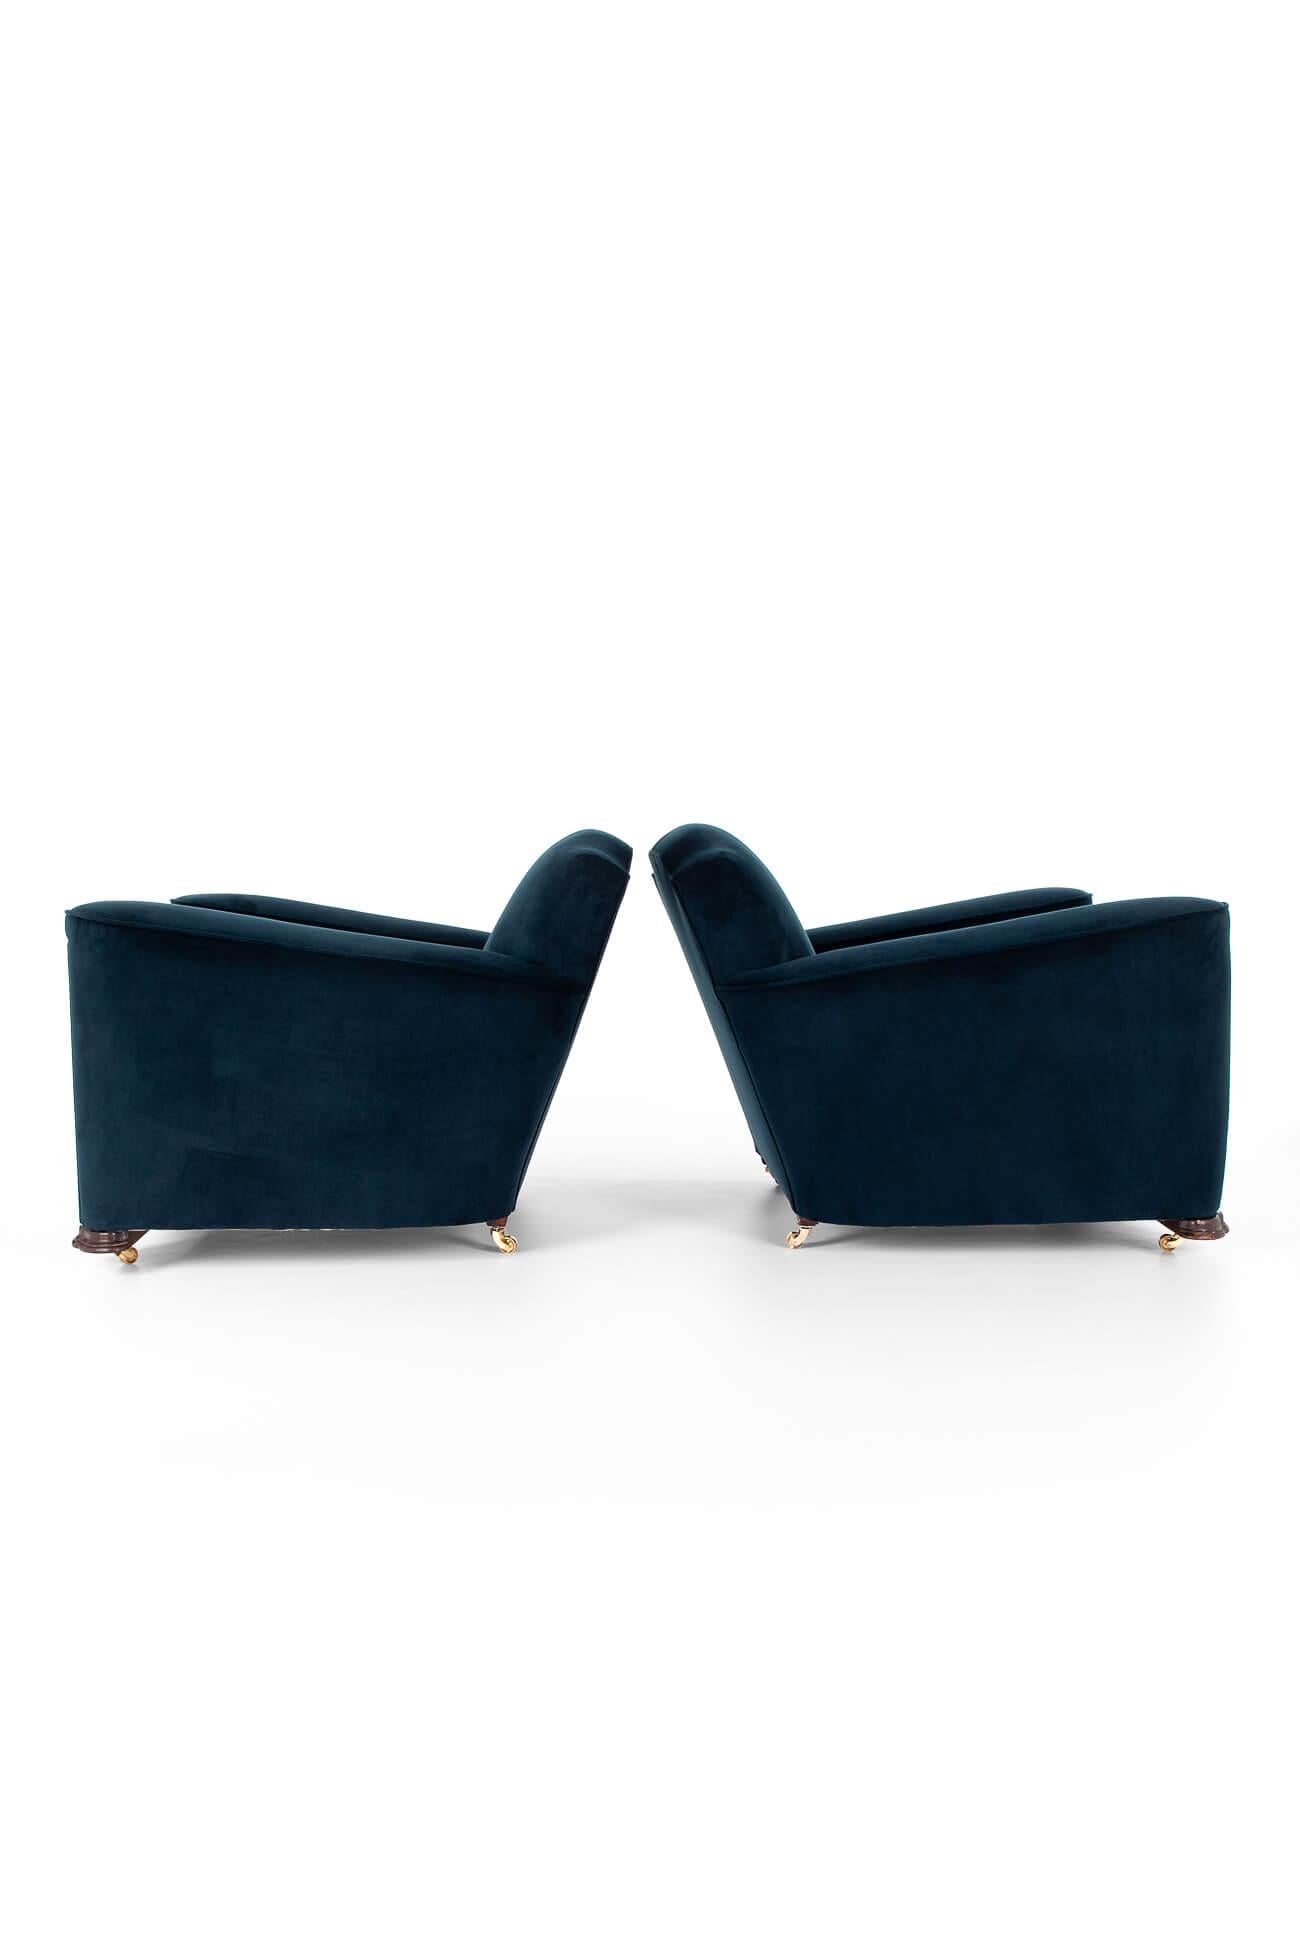 British Pair of Art Deco Velvet Armchairs For Sale